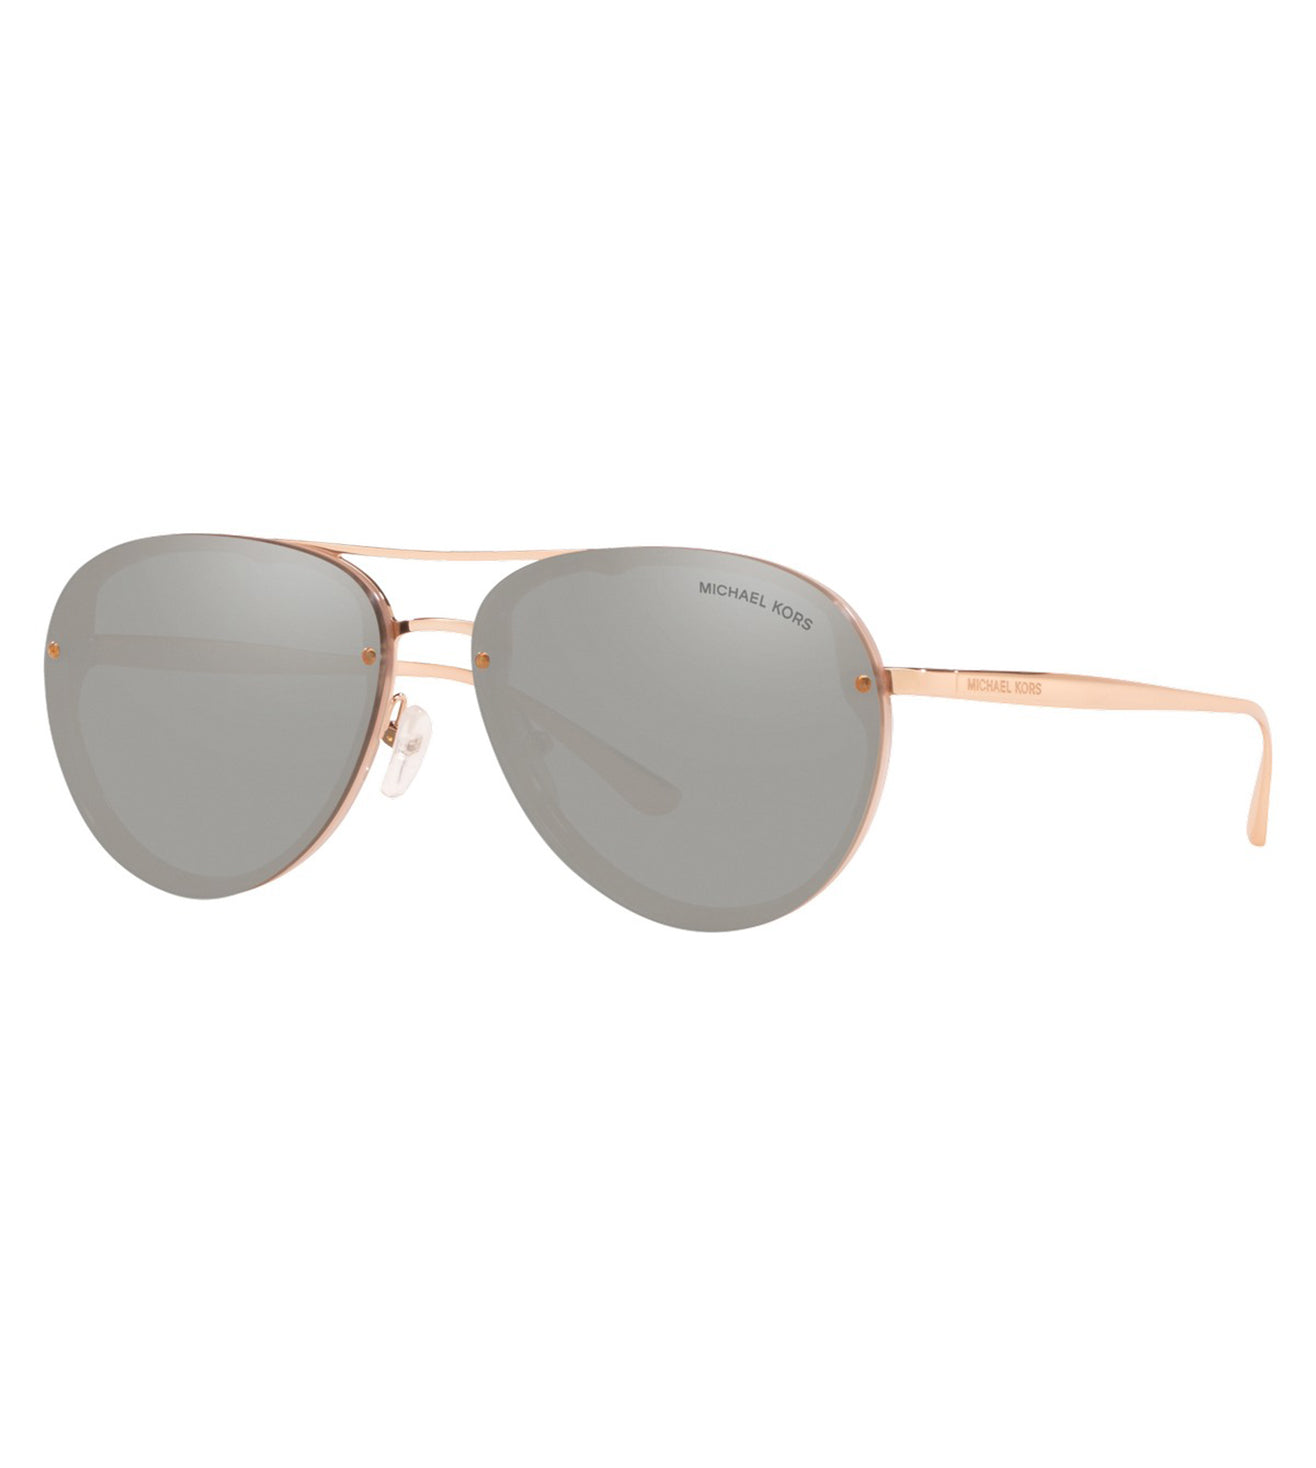 Michael Kors Women's Silver Aviator Sunglasses